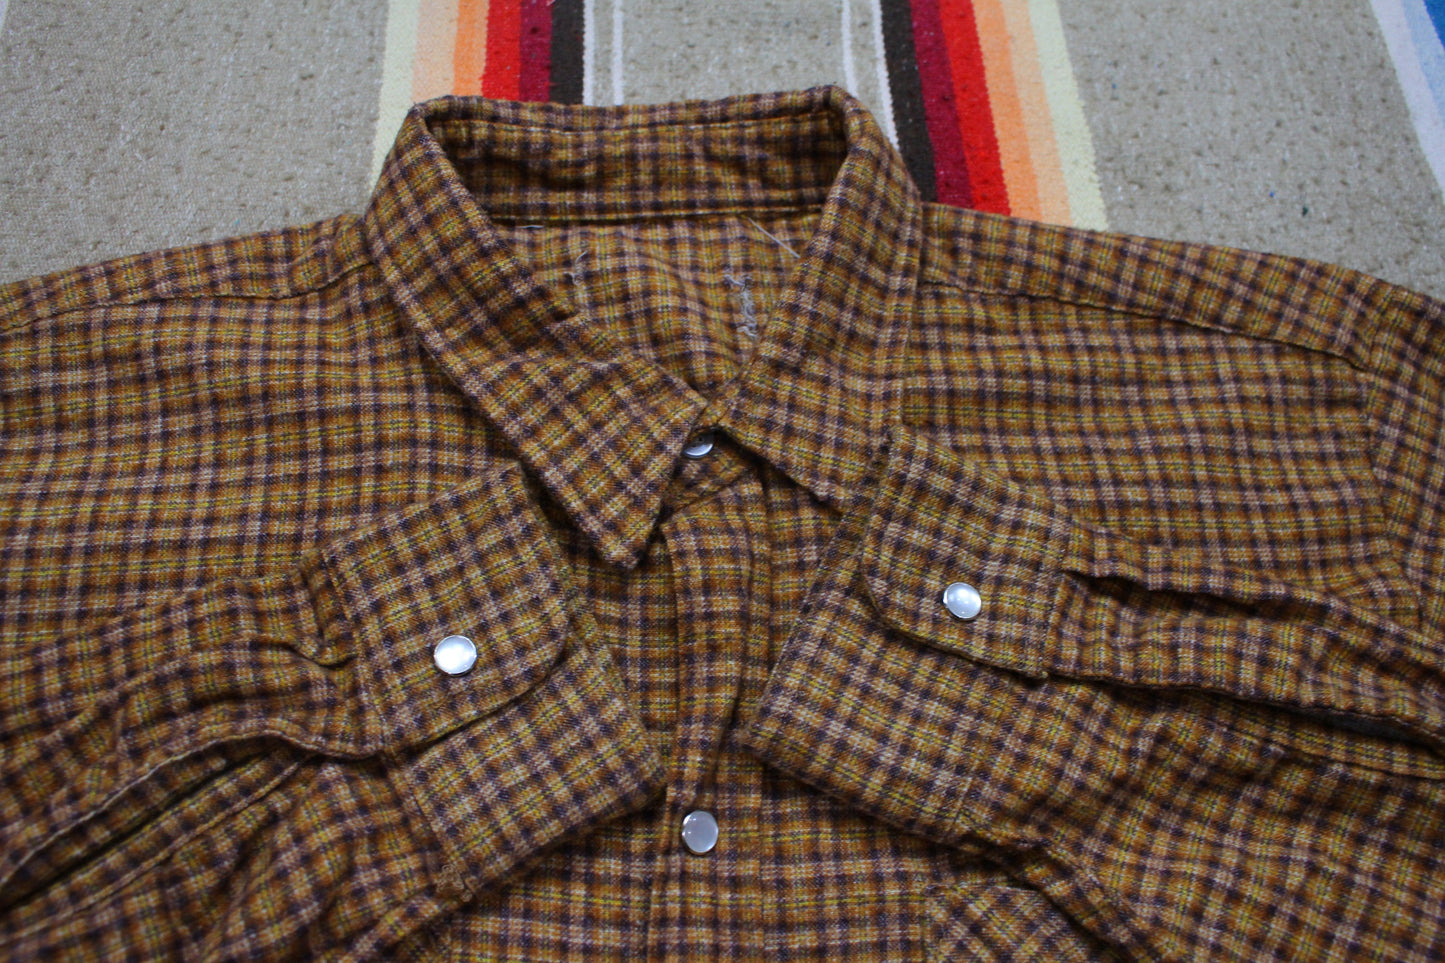 1980s/1990s Brown Plaid Printed Cotton Snaps Shirt Size M